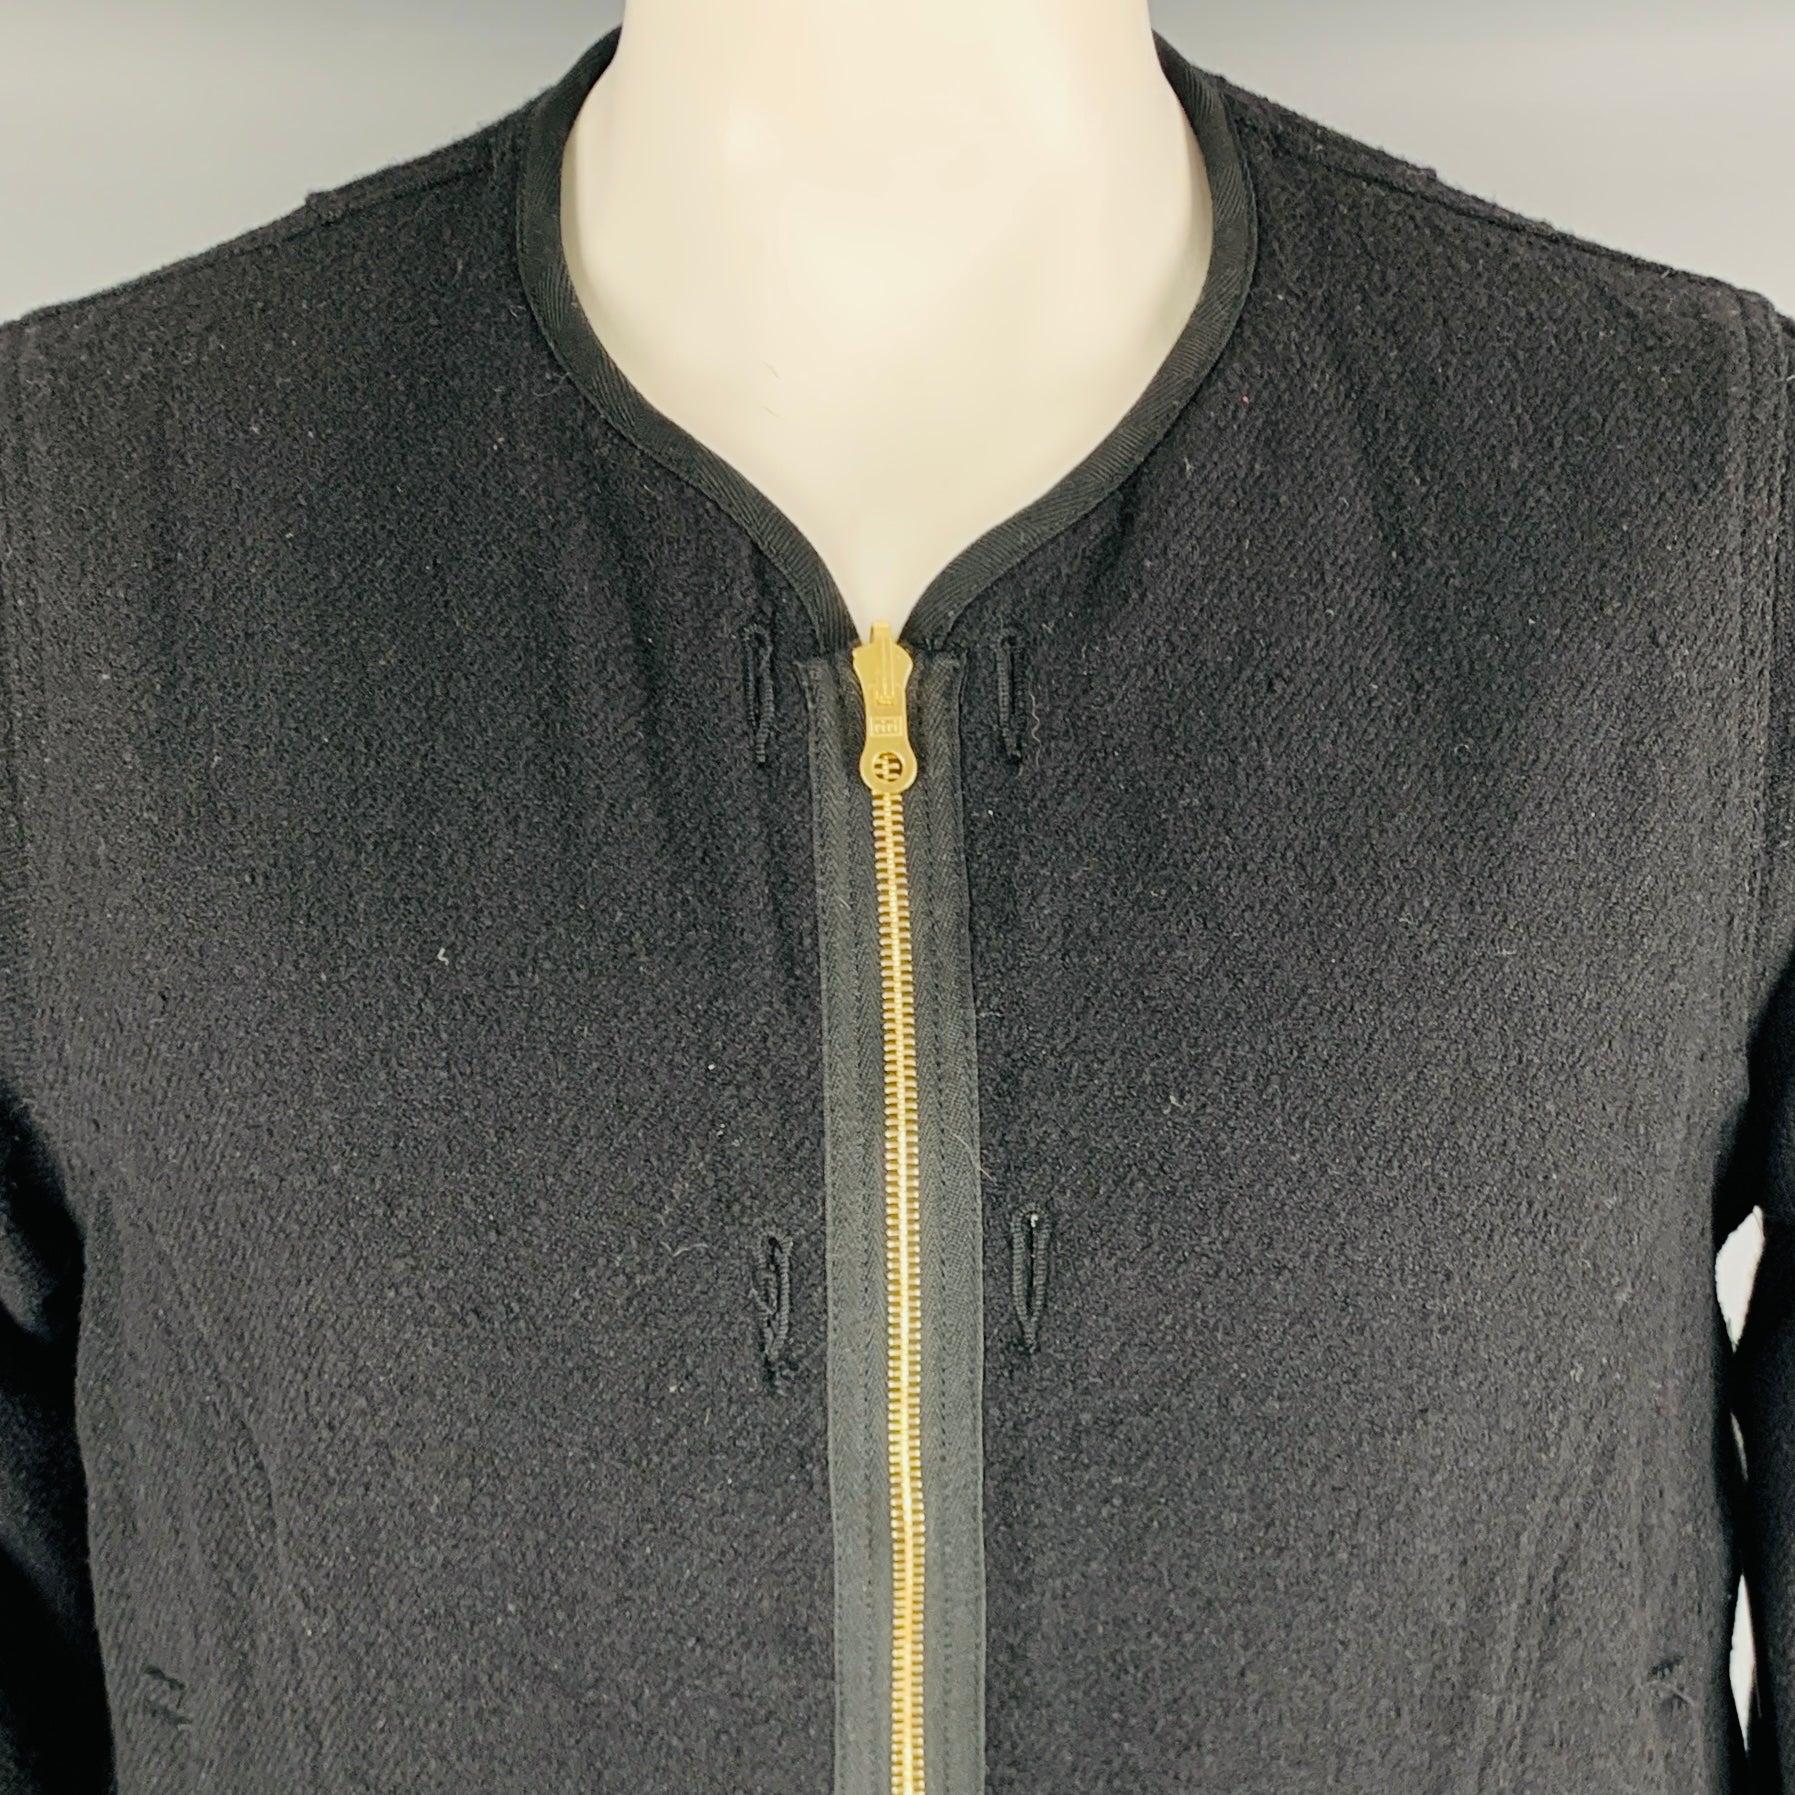 VISVIM -Wawona Down Jacket -Size L Black Beige Tweed Wool Linen Zip Up Coat In Good Condition For Sale In San Francisco, CA